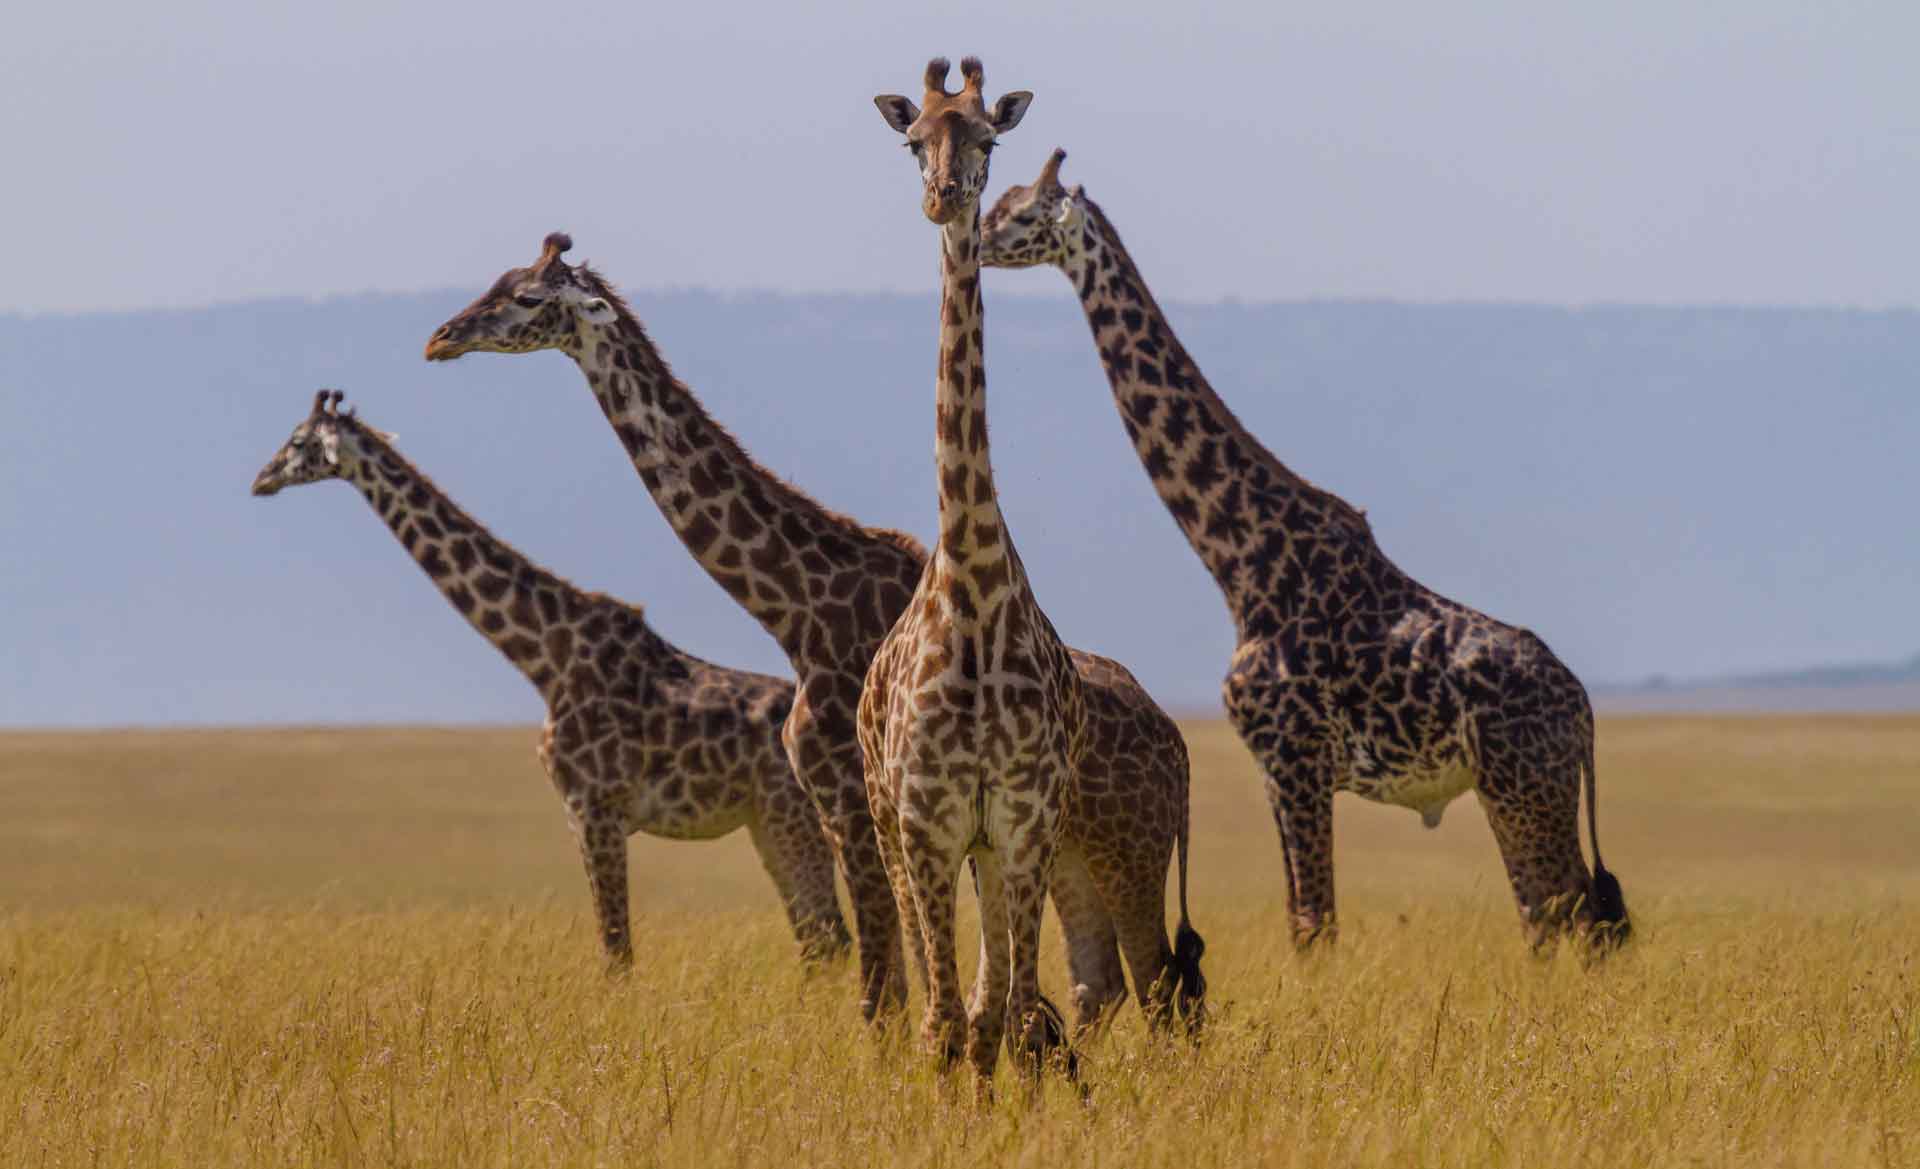 Photo of giraffes in the African savannah